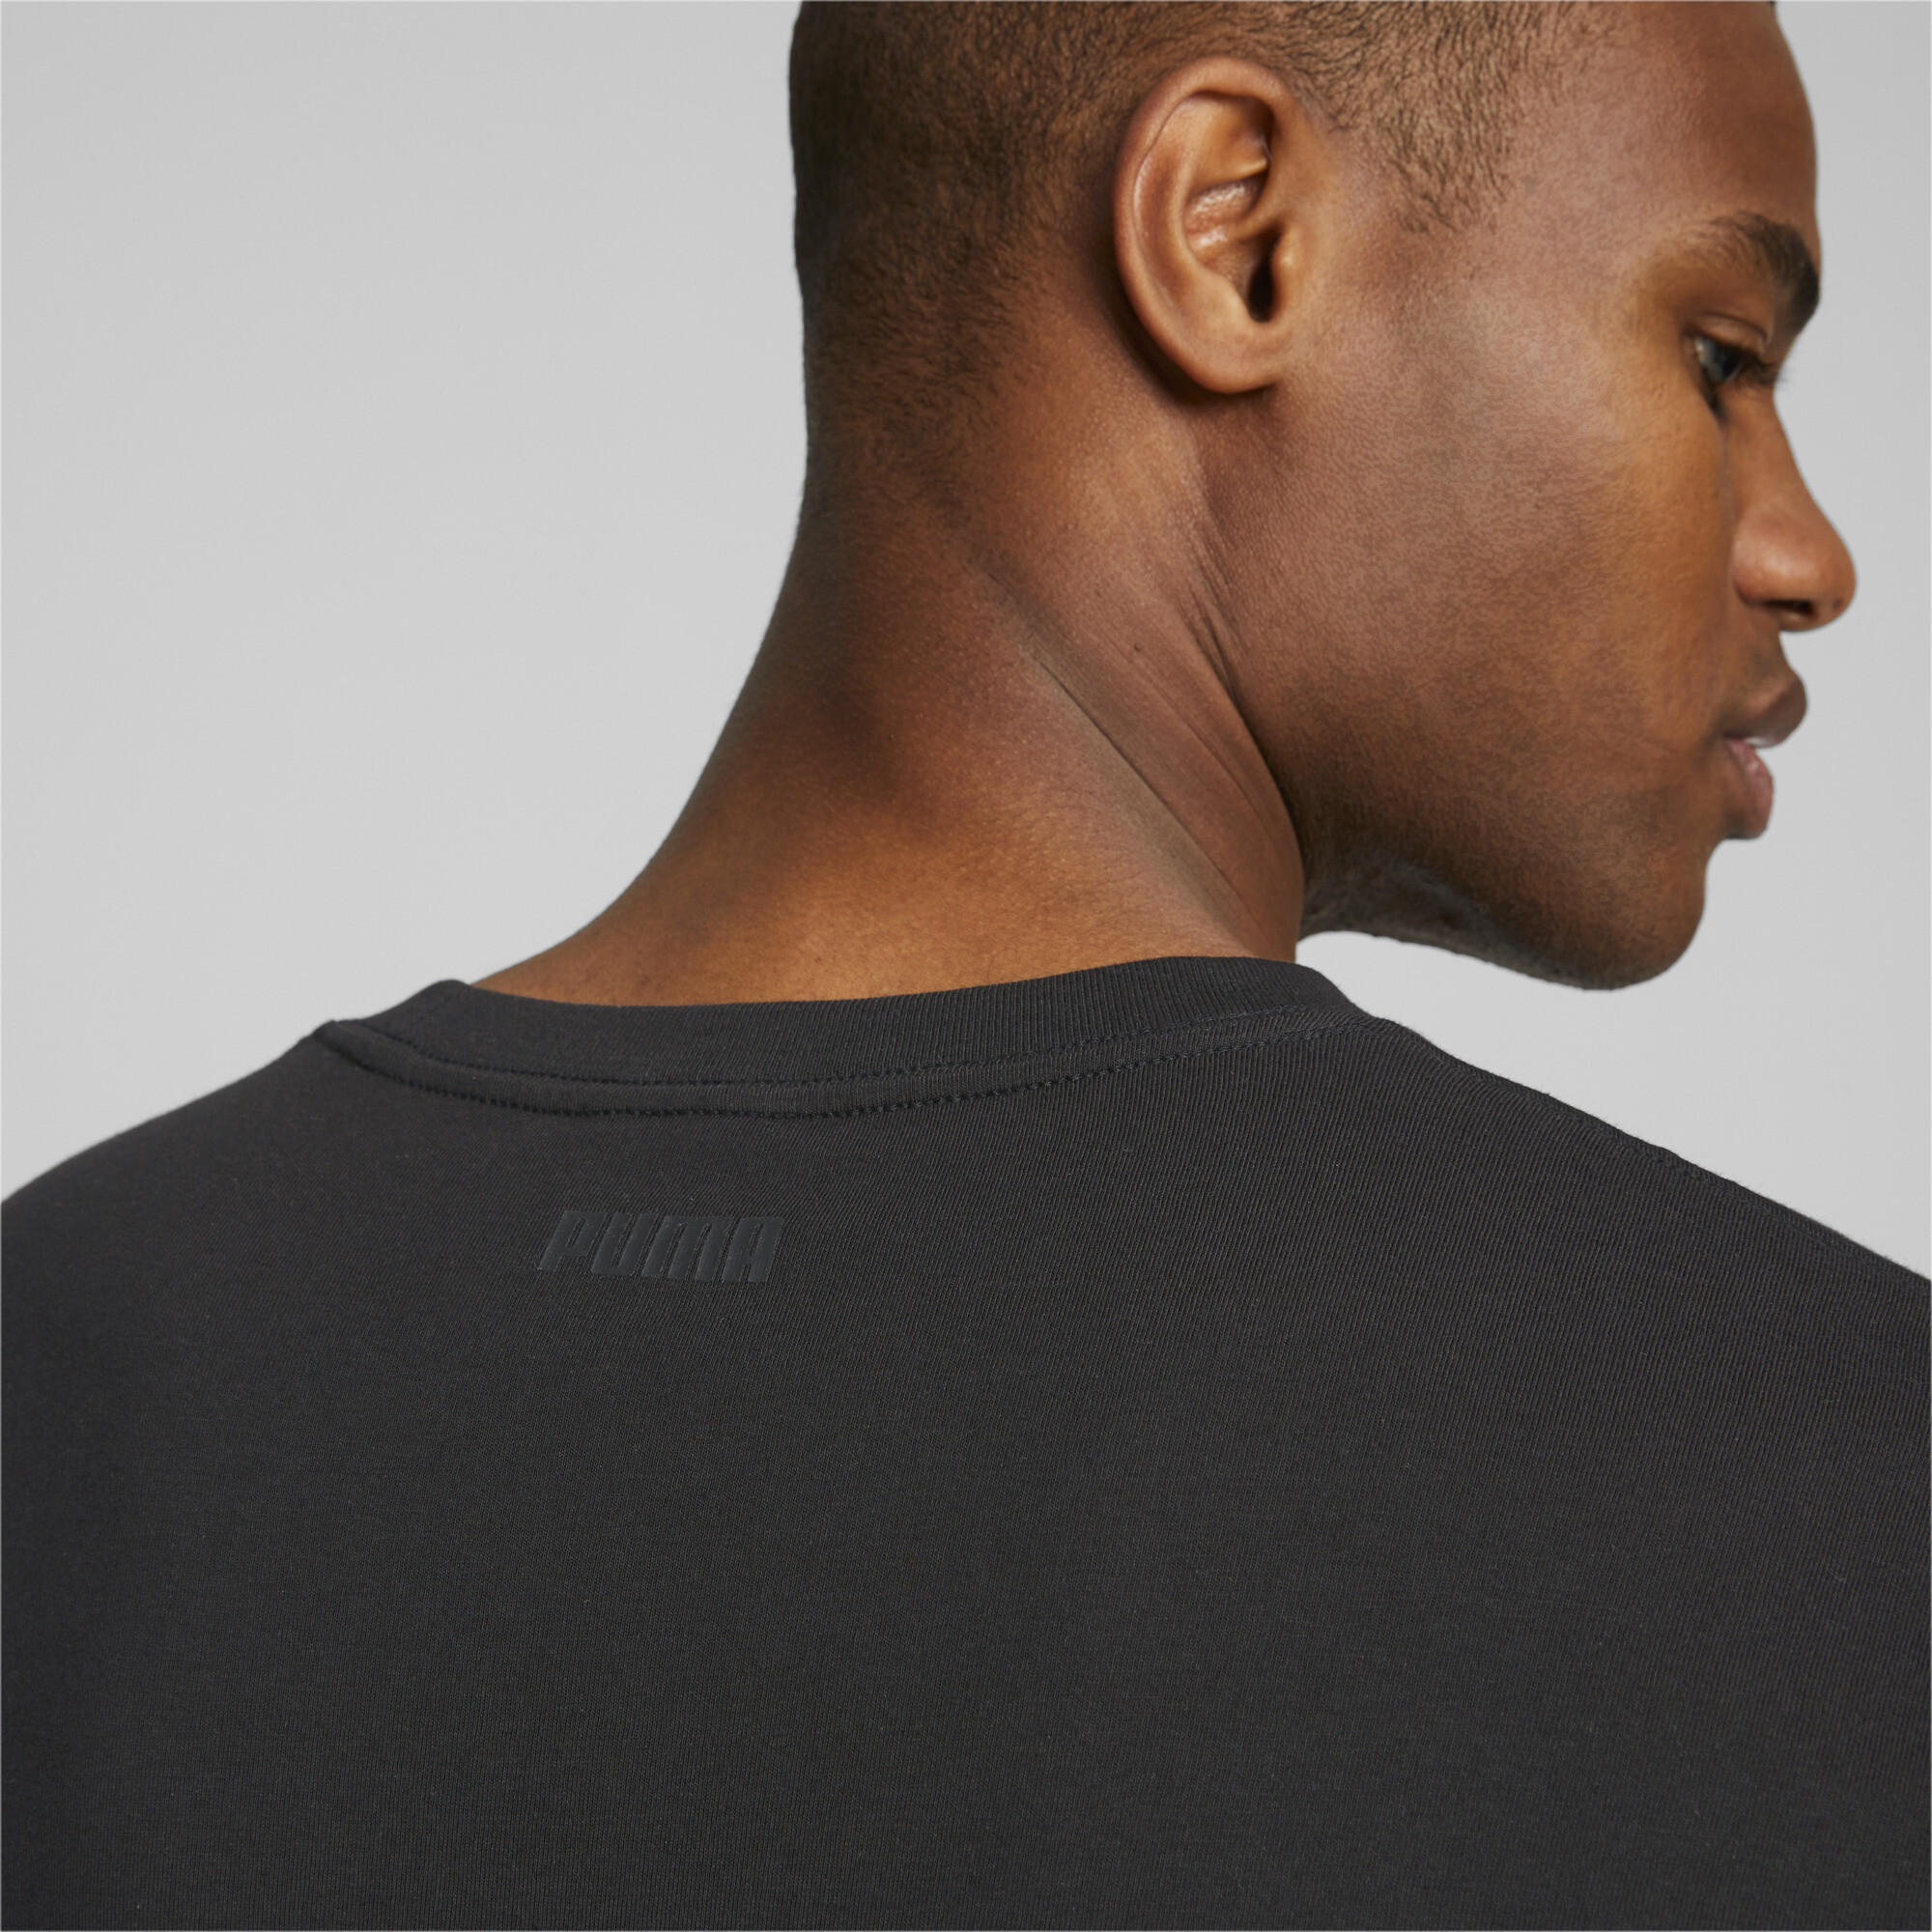 Men's Puma Franchise's Basketball Graphic T-Shirt, Black, Size XS, Clothing